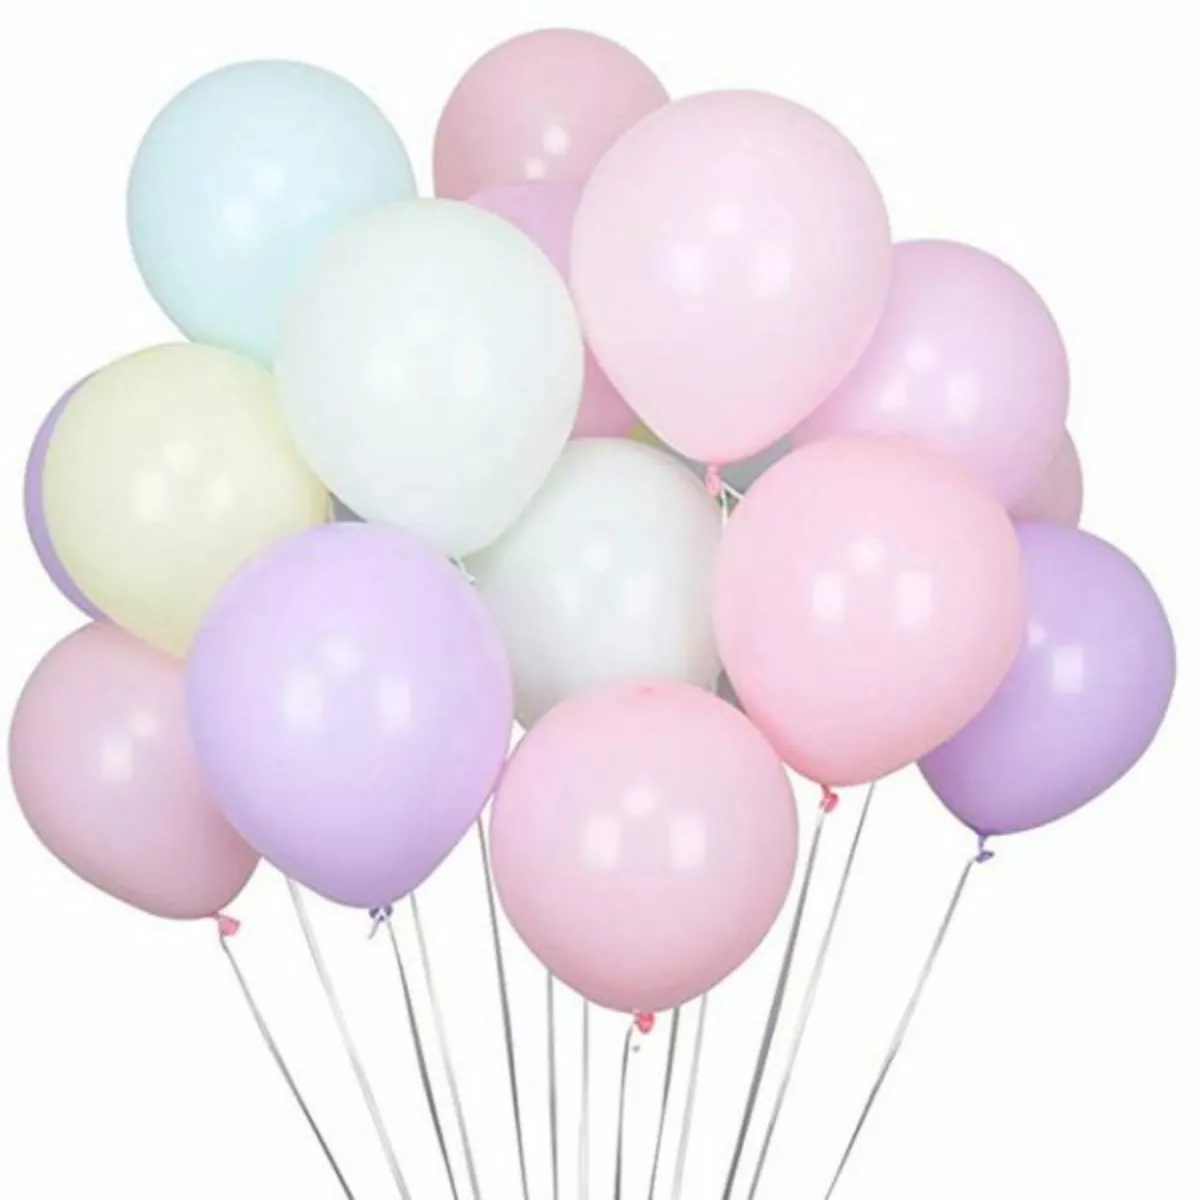 50 Unidades - Balões Bexiga Candy Colors/tons Pastel - N° 9